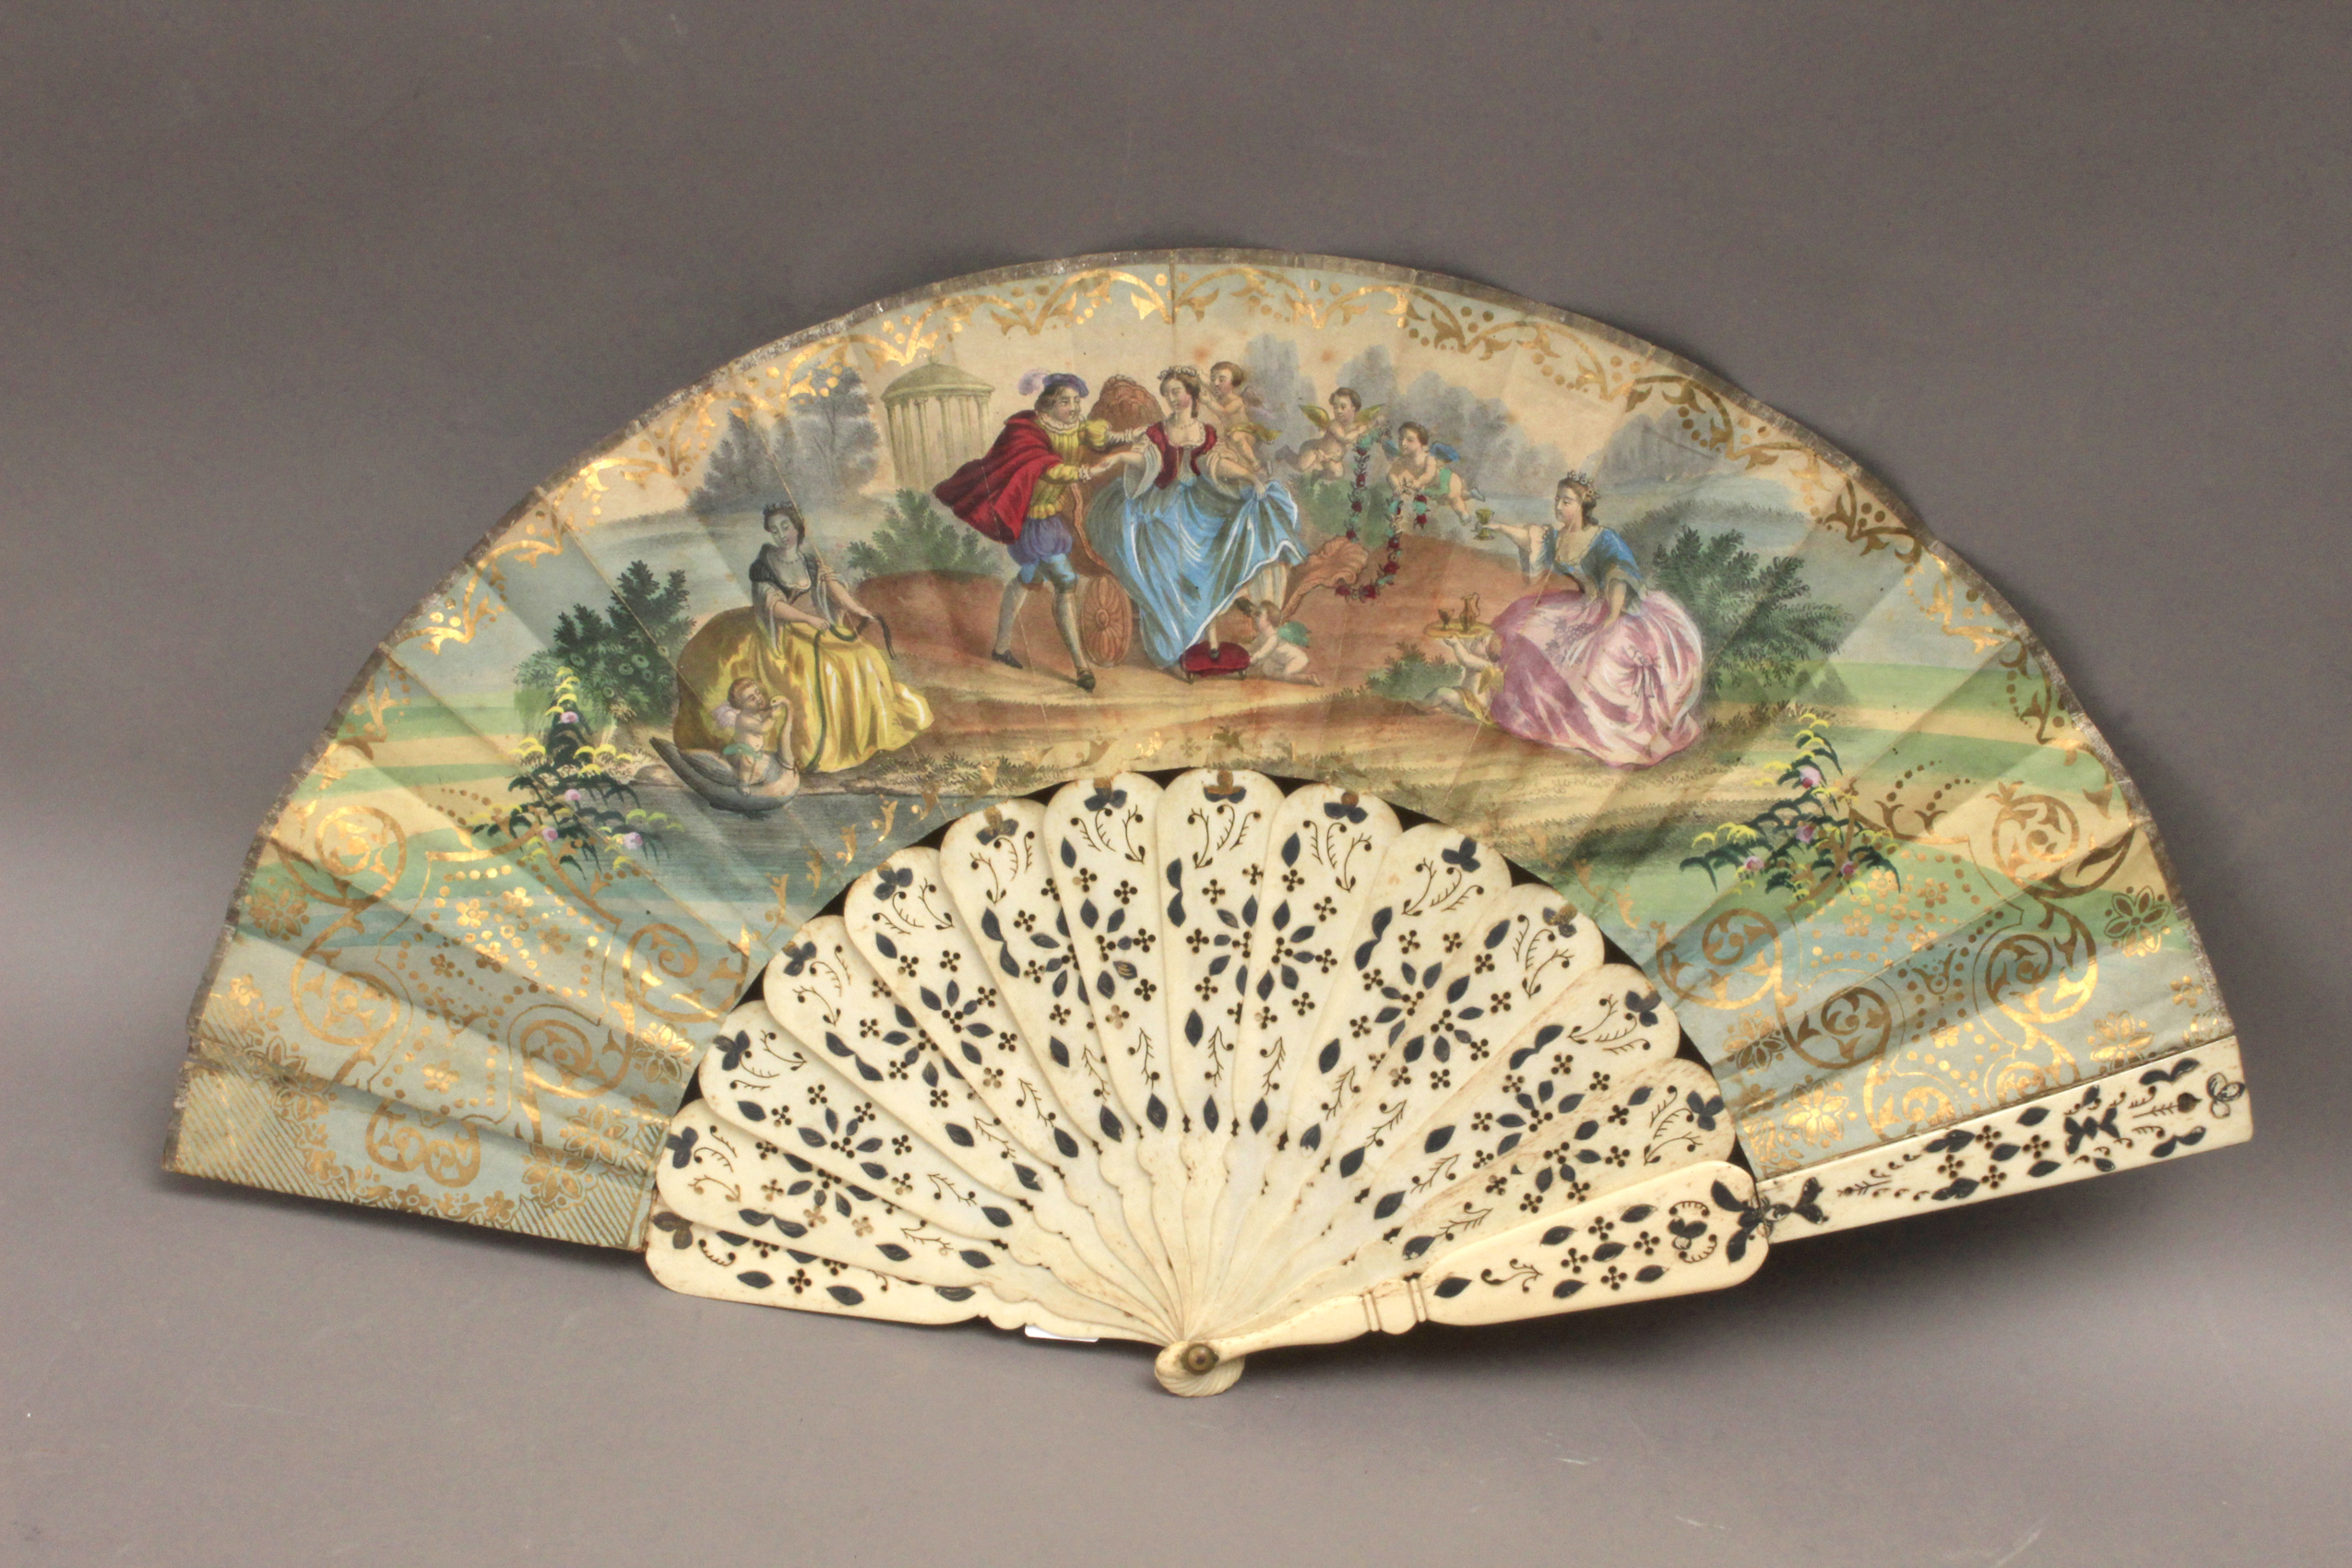 A 19th century Spanish Isabelino fan